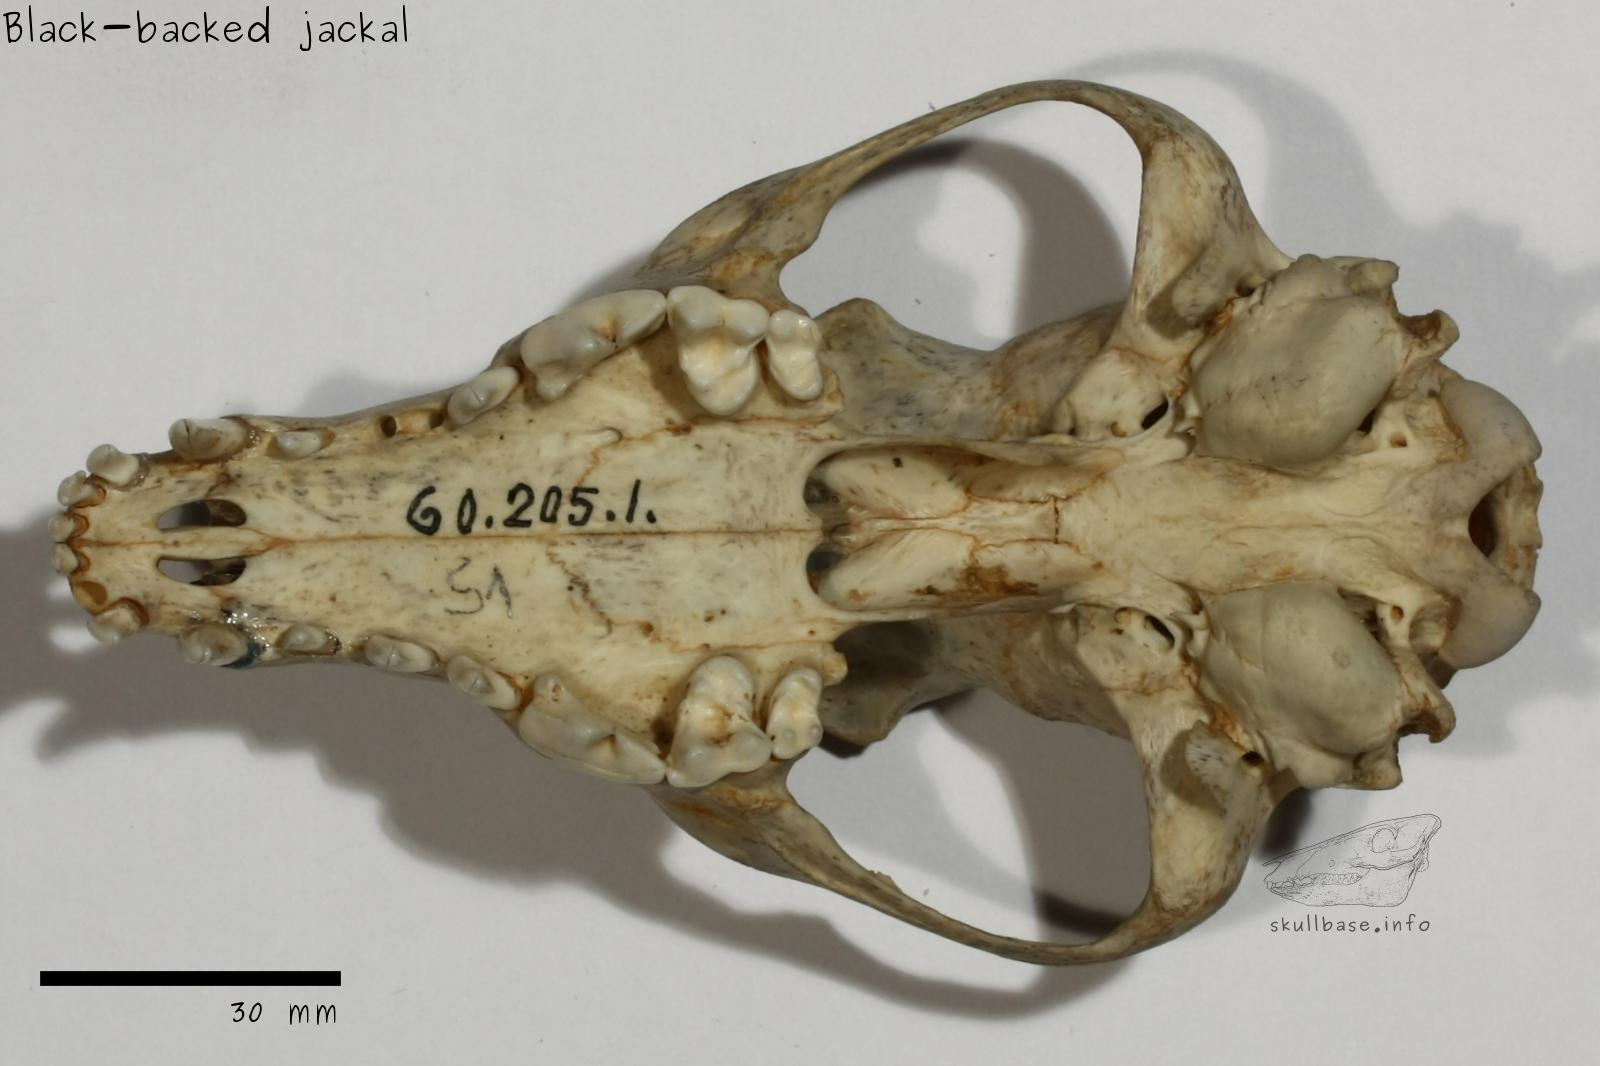 Black-backed jackal (Canis mesomelas) skull ventral view